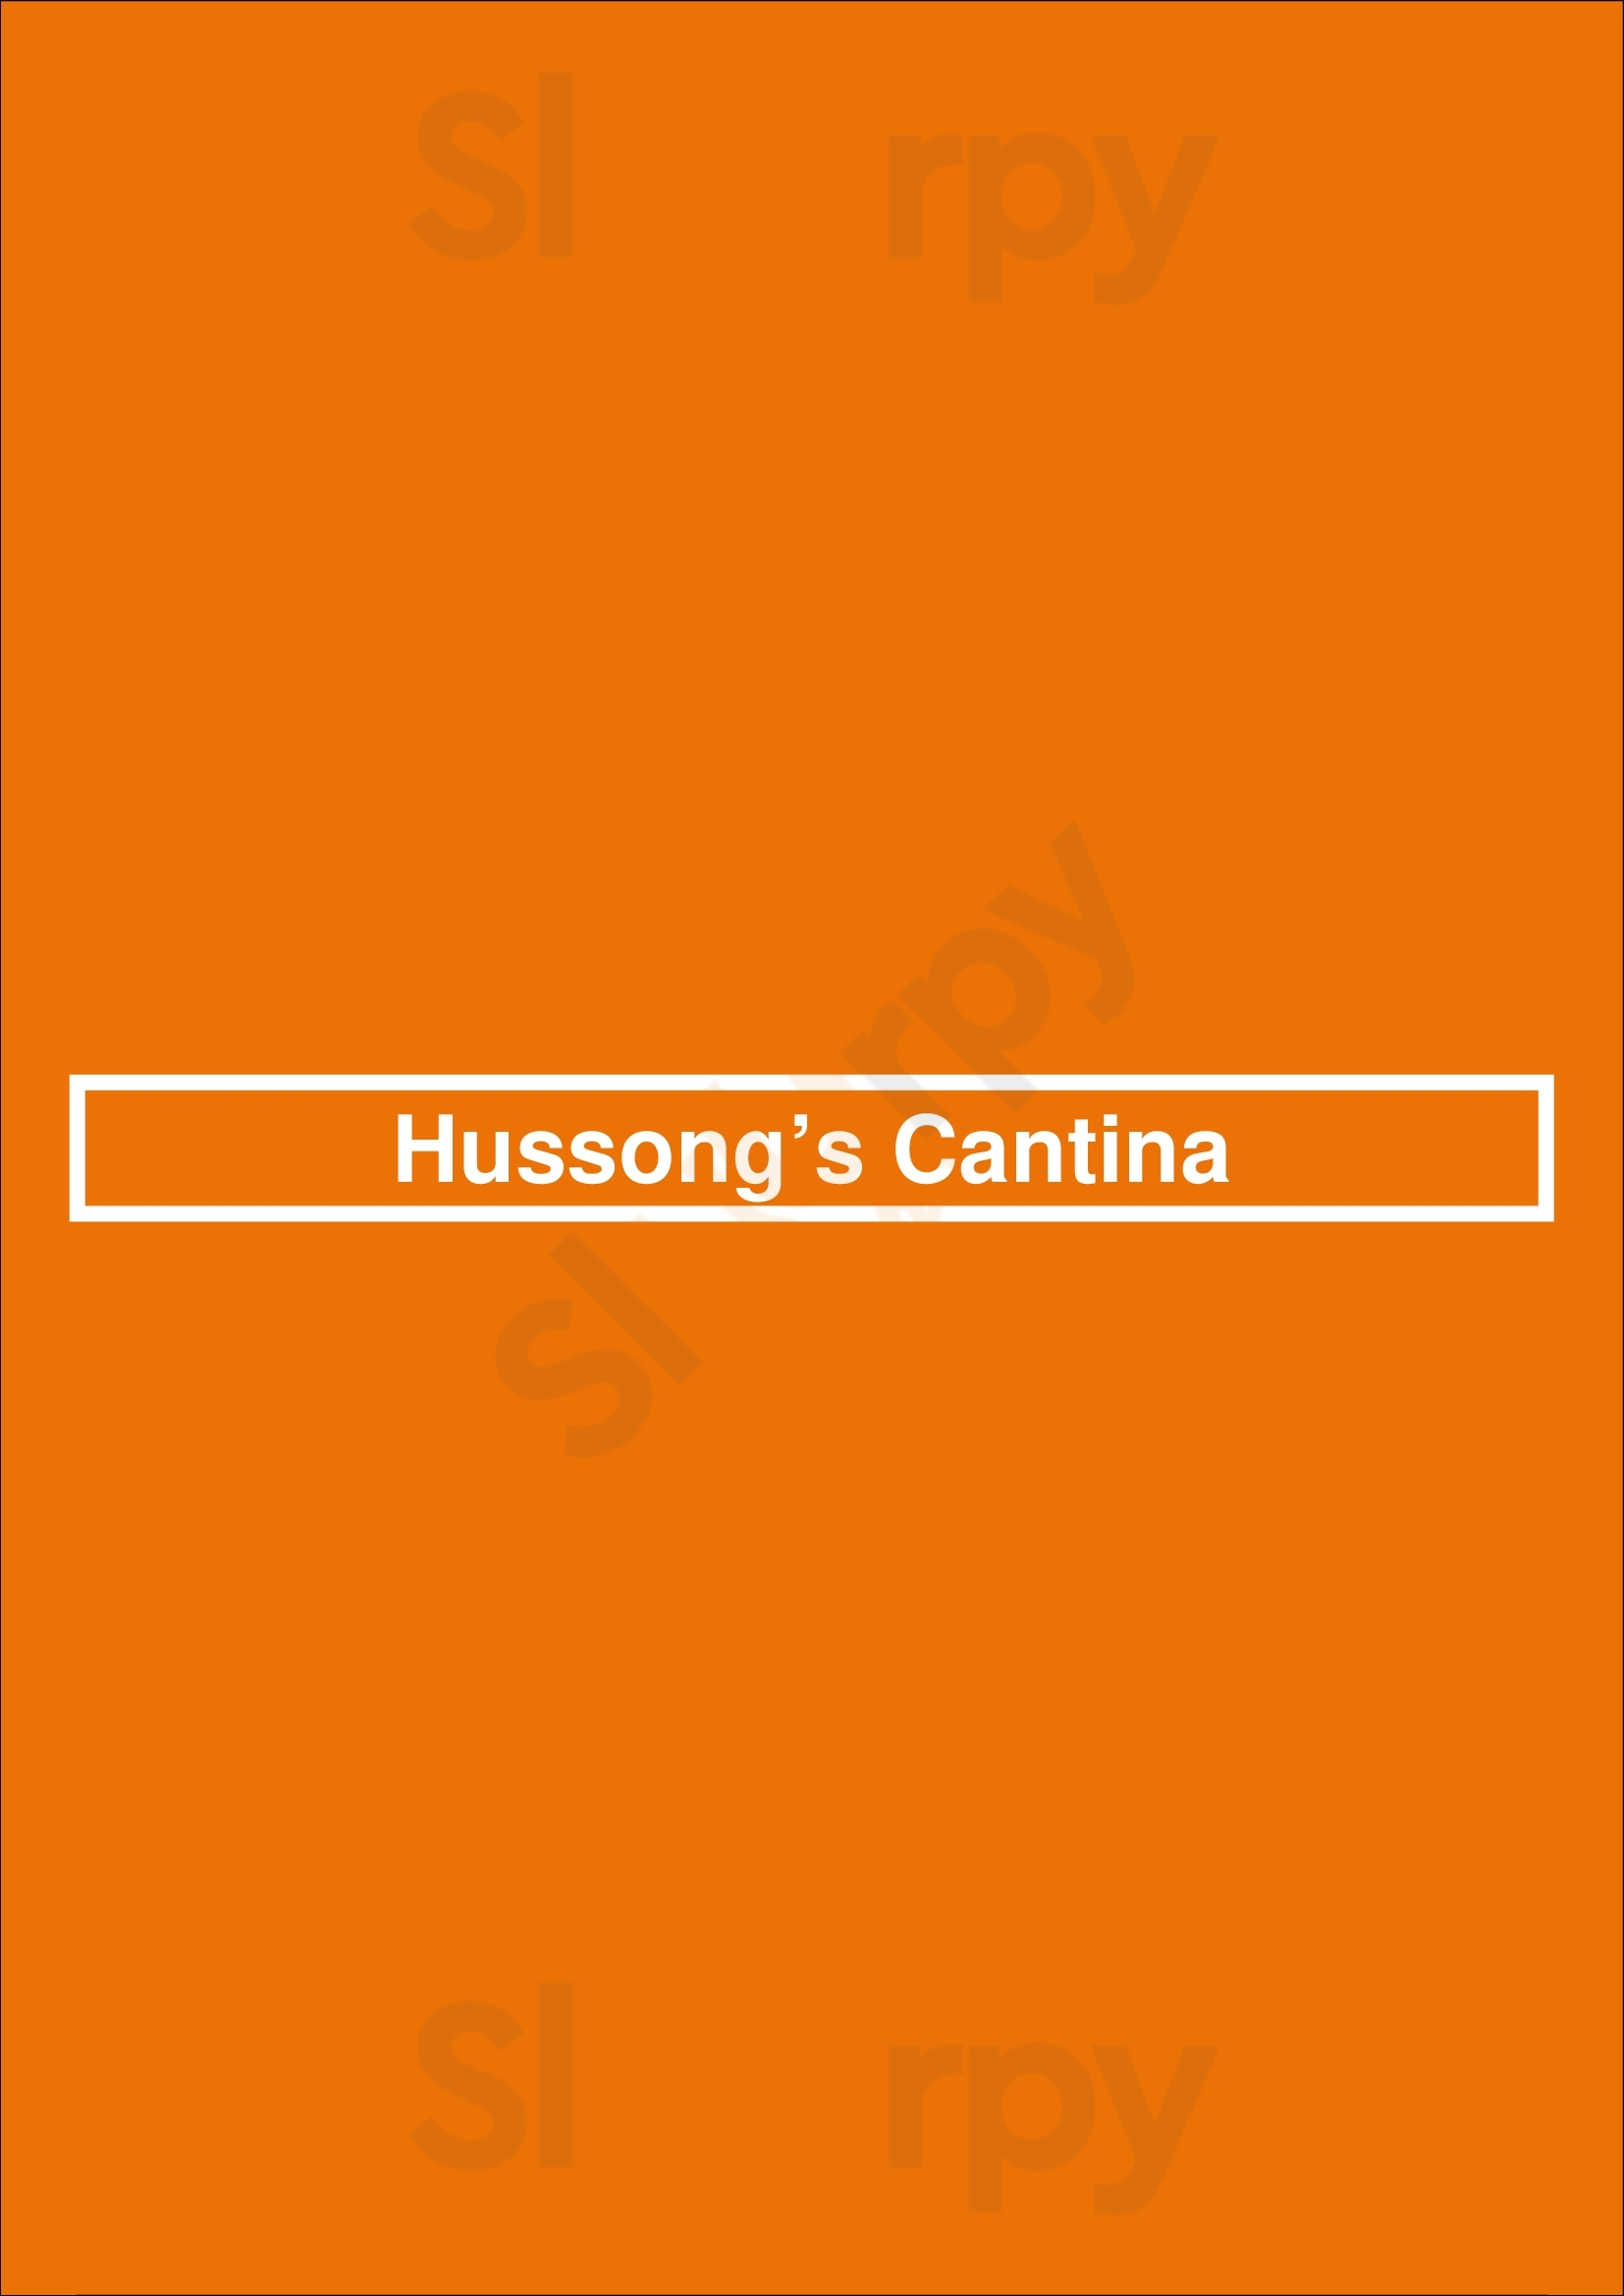 Hussong's Mexican Cantina - Boca Park Las Vegas Menu - 1